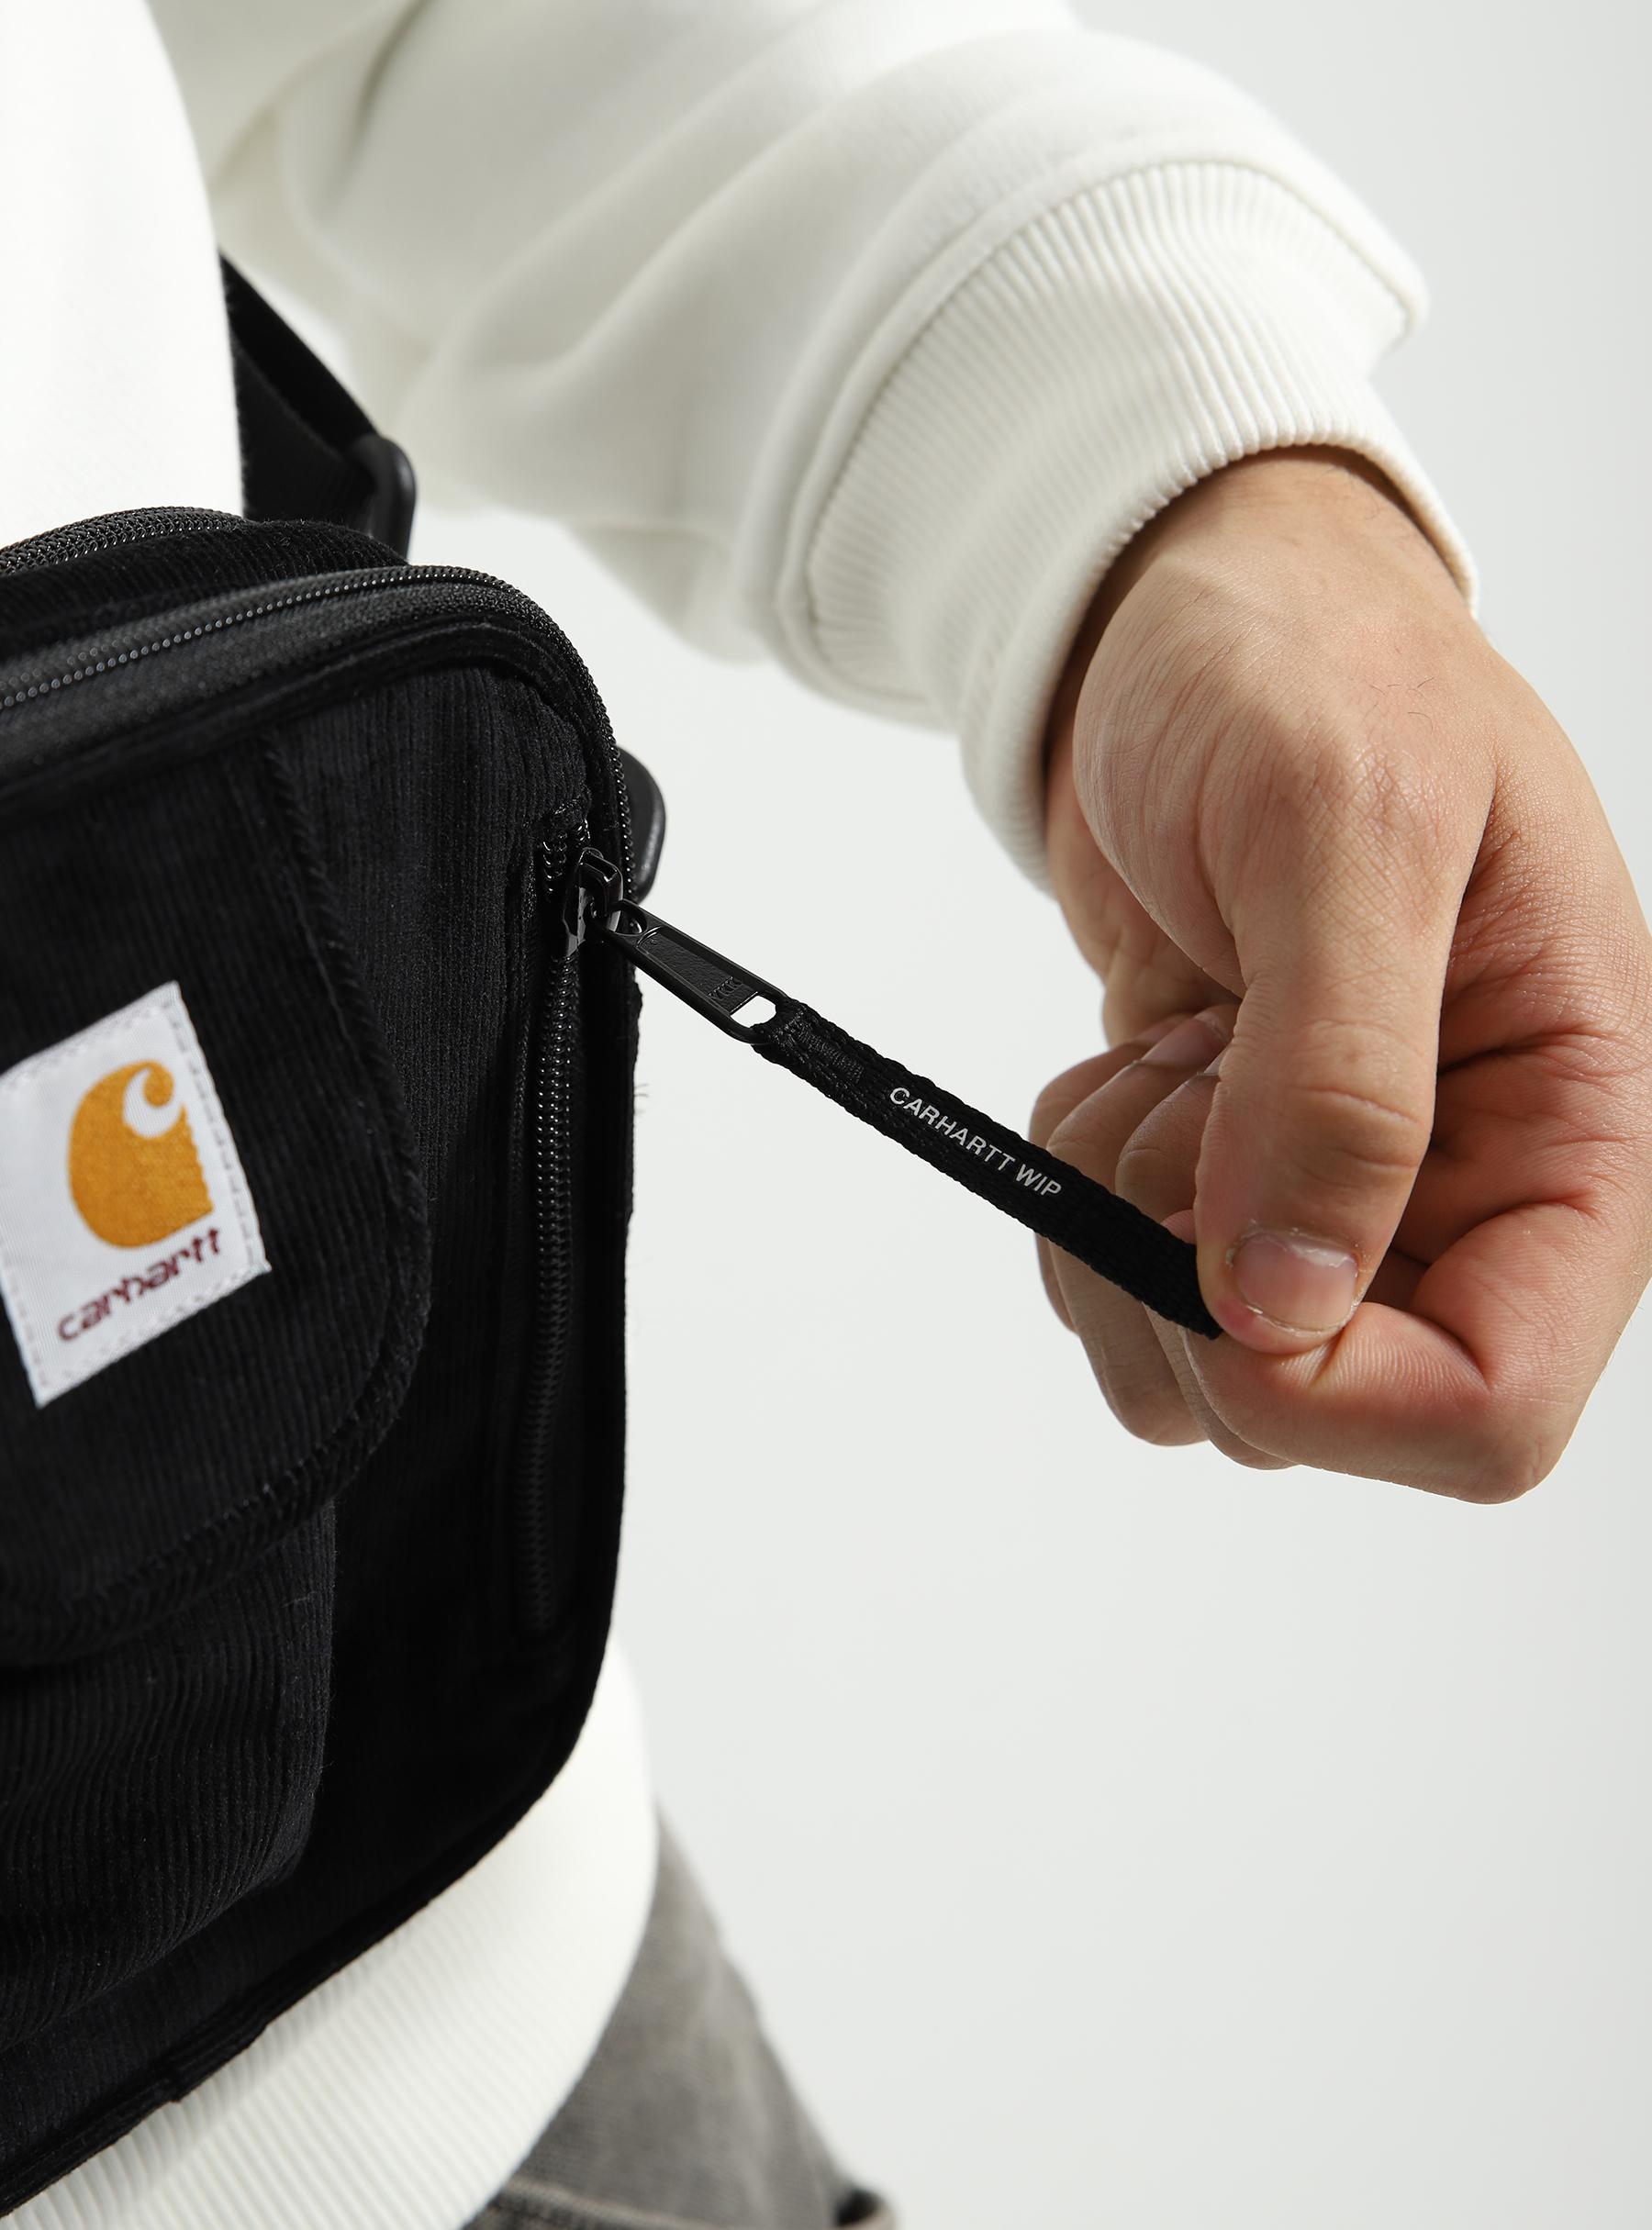 Carhartt Wip Essentials Cord Bag Tasche 1,7 L (black